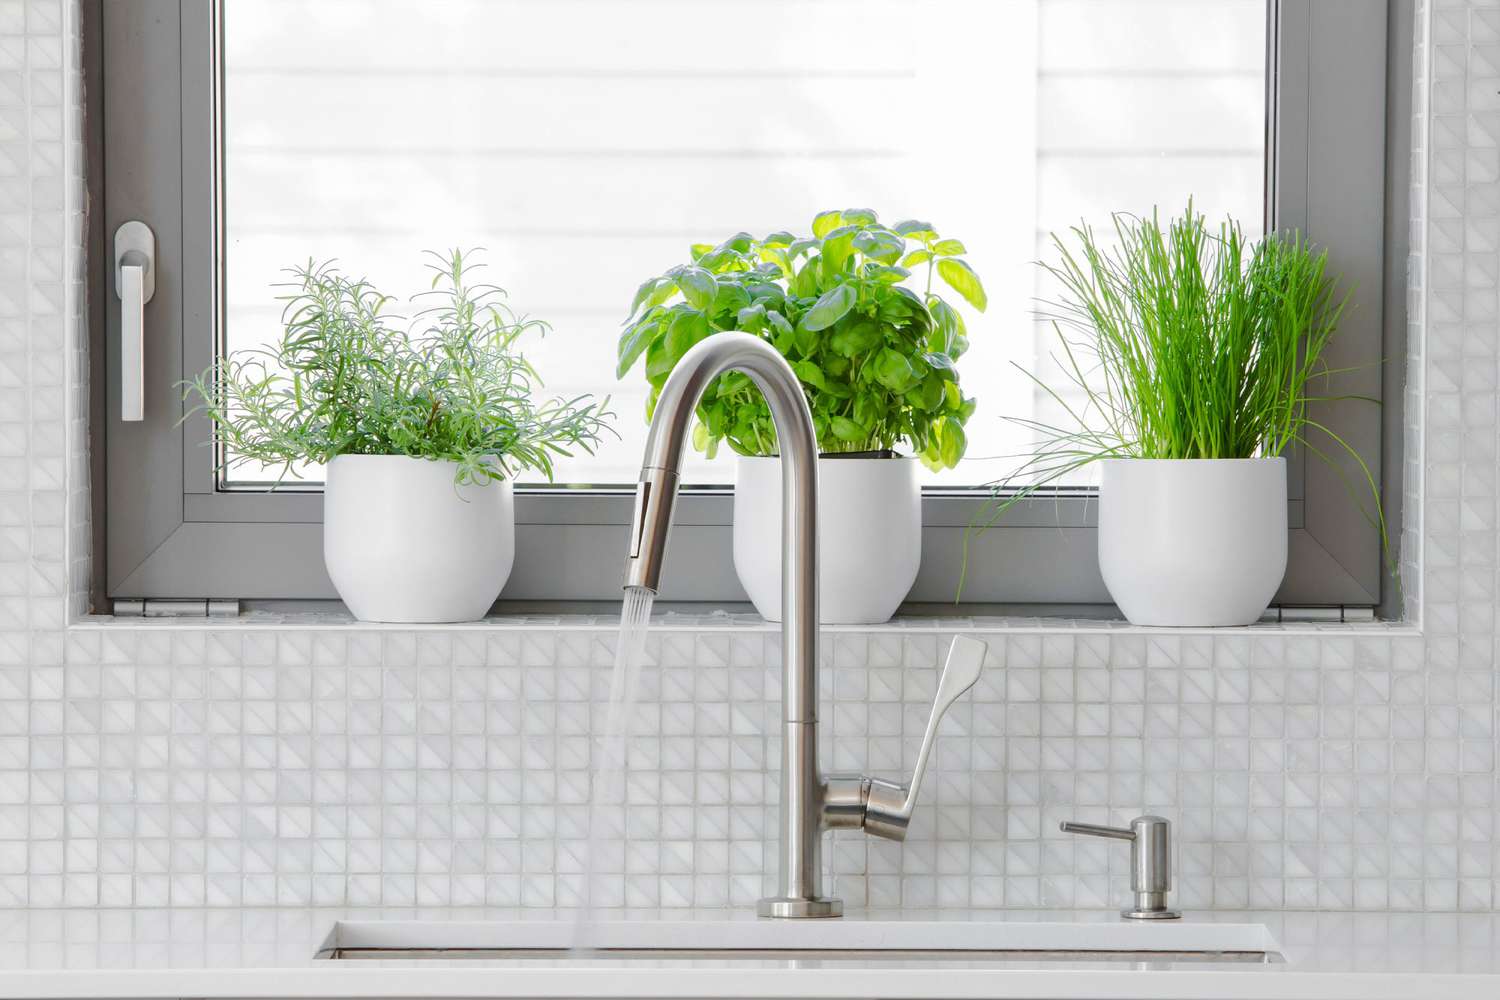 Kitchen sink with plants